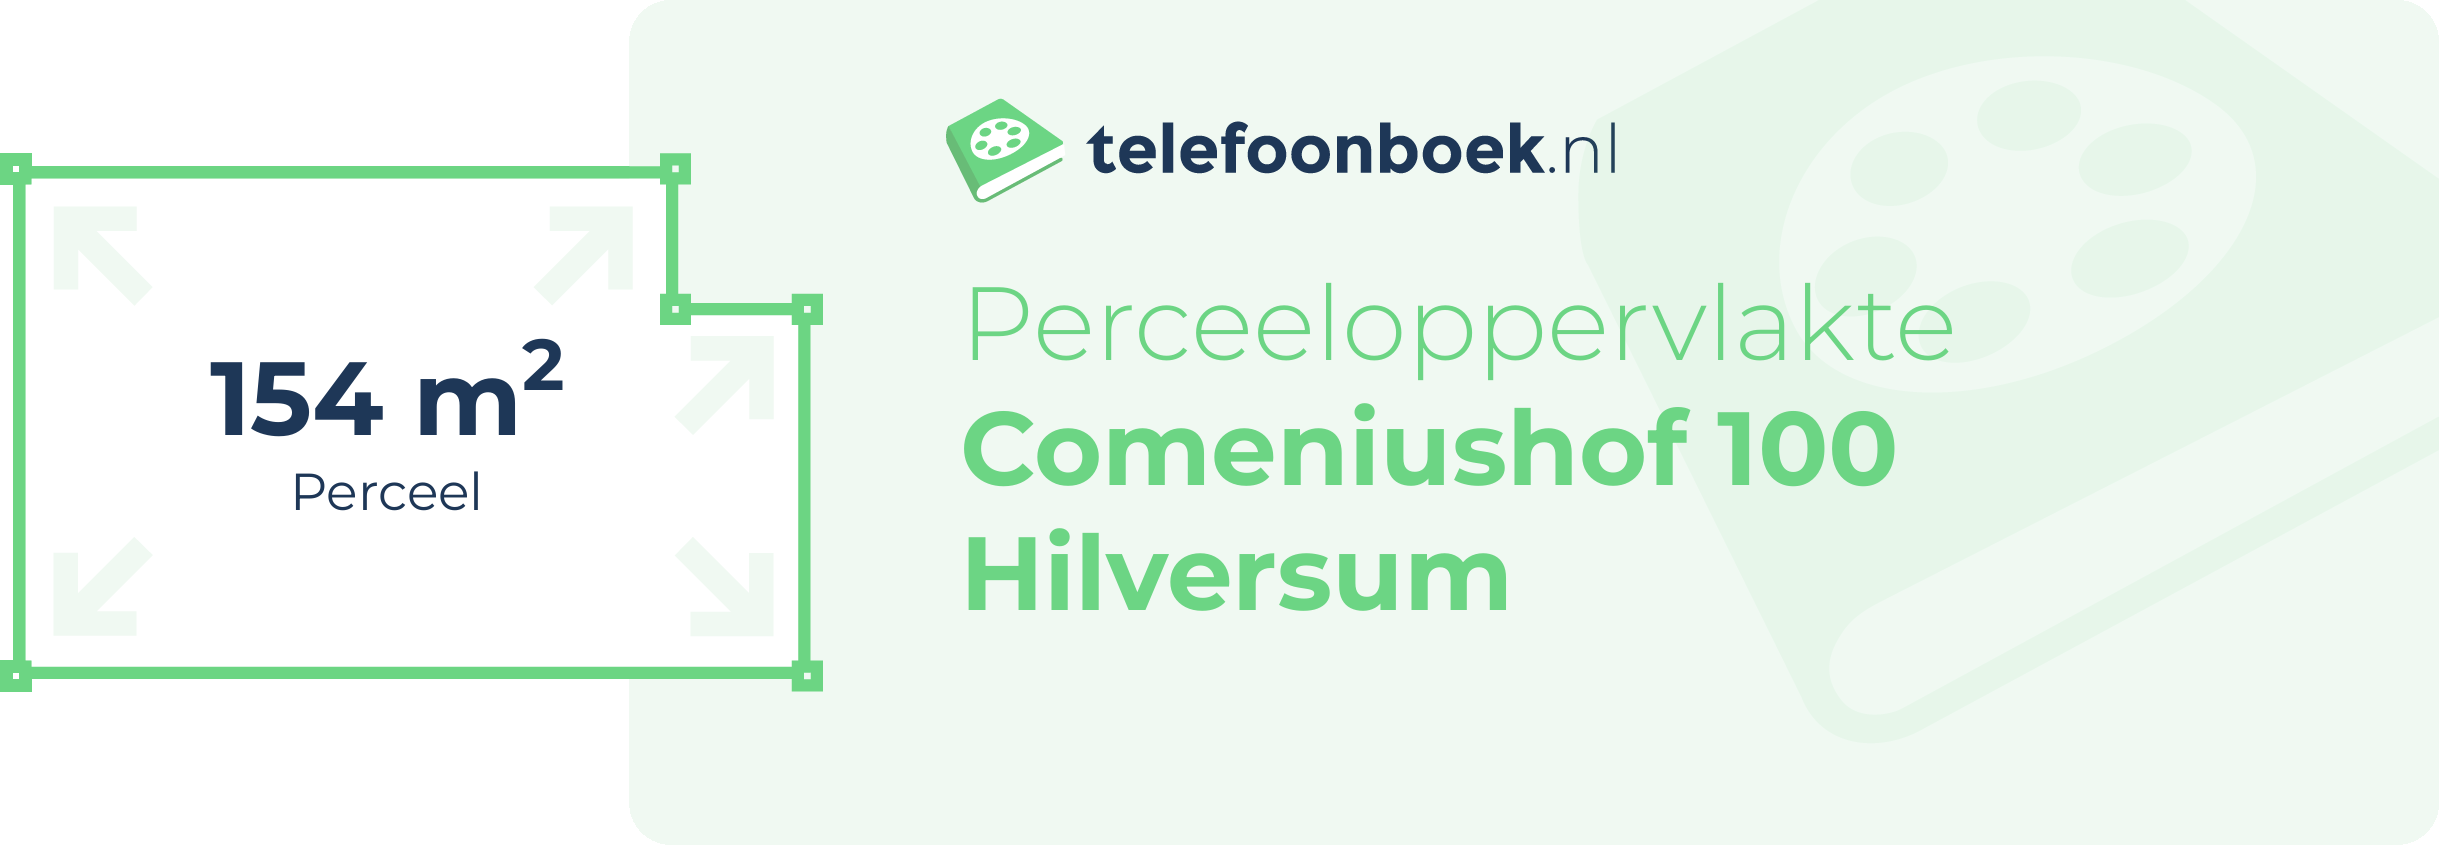 Perceeloppervlakte Comeniushof 100 Hilversum